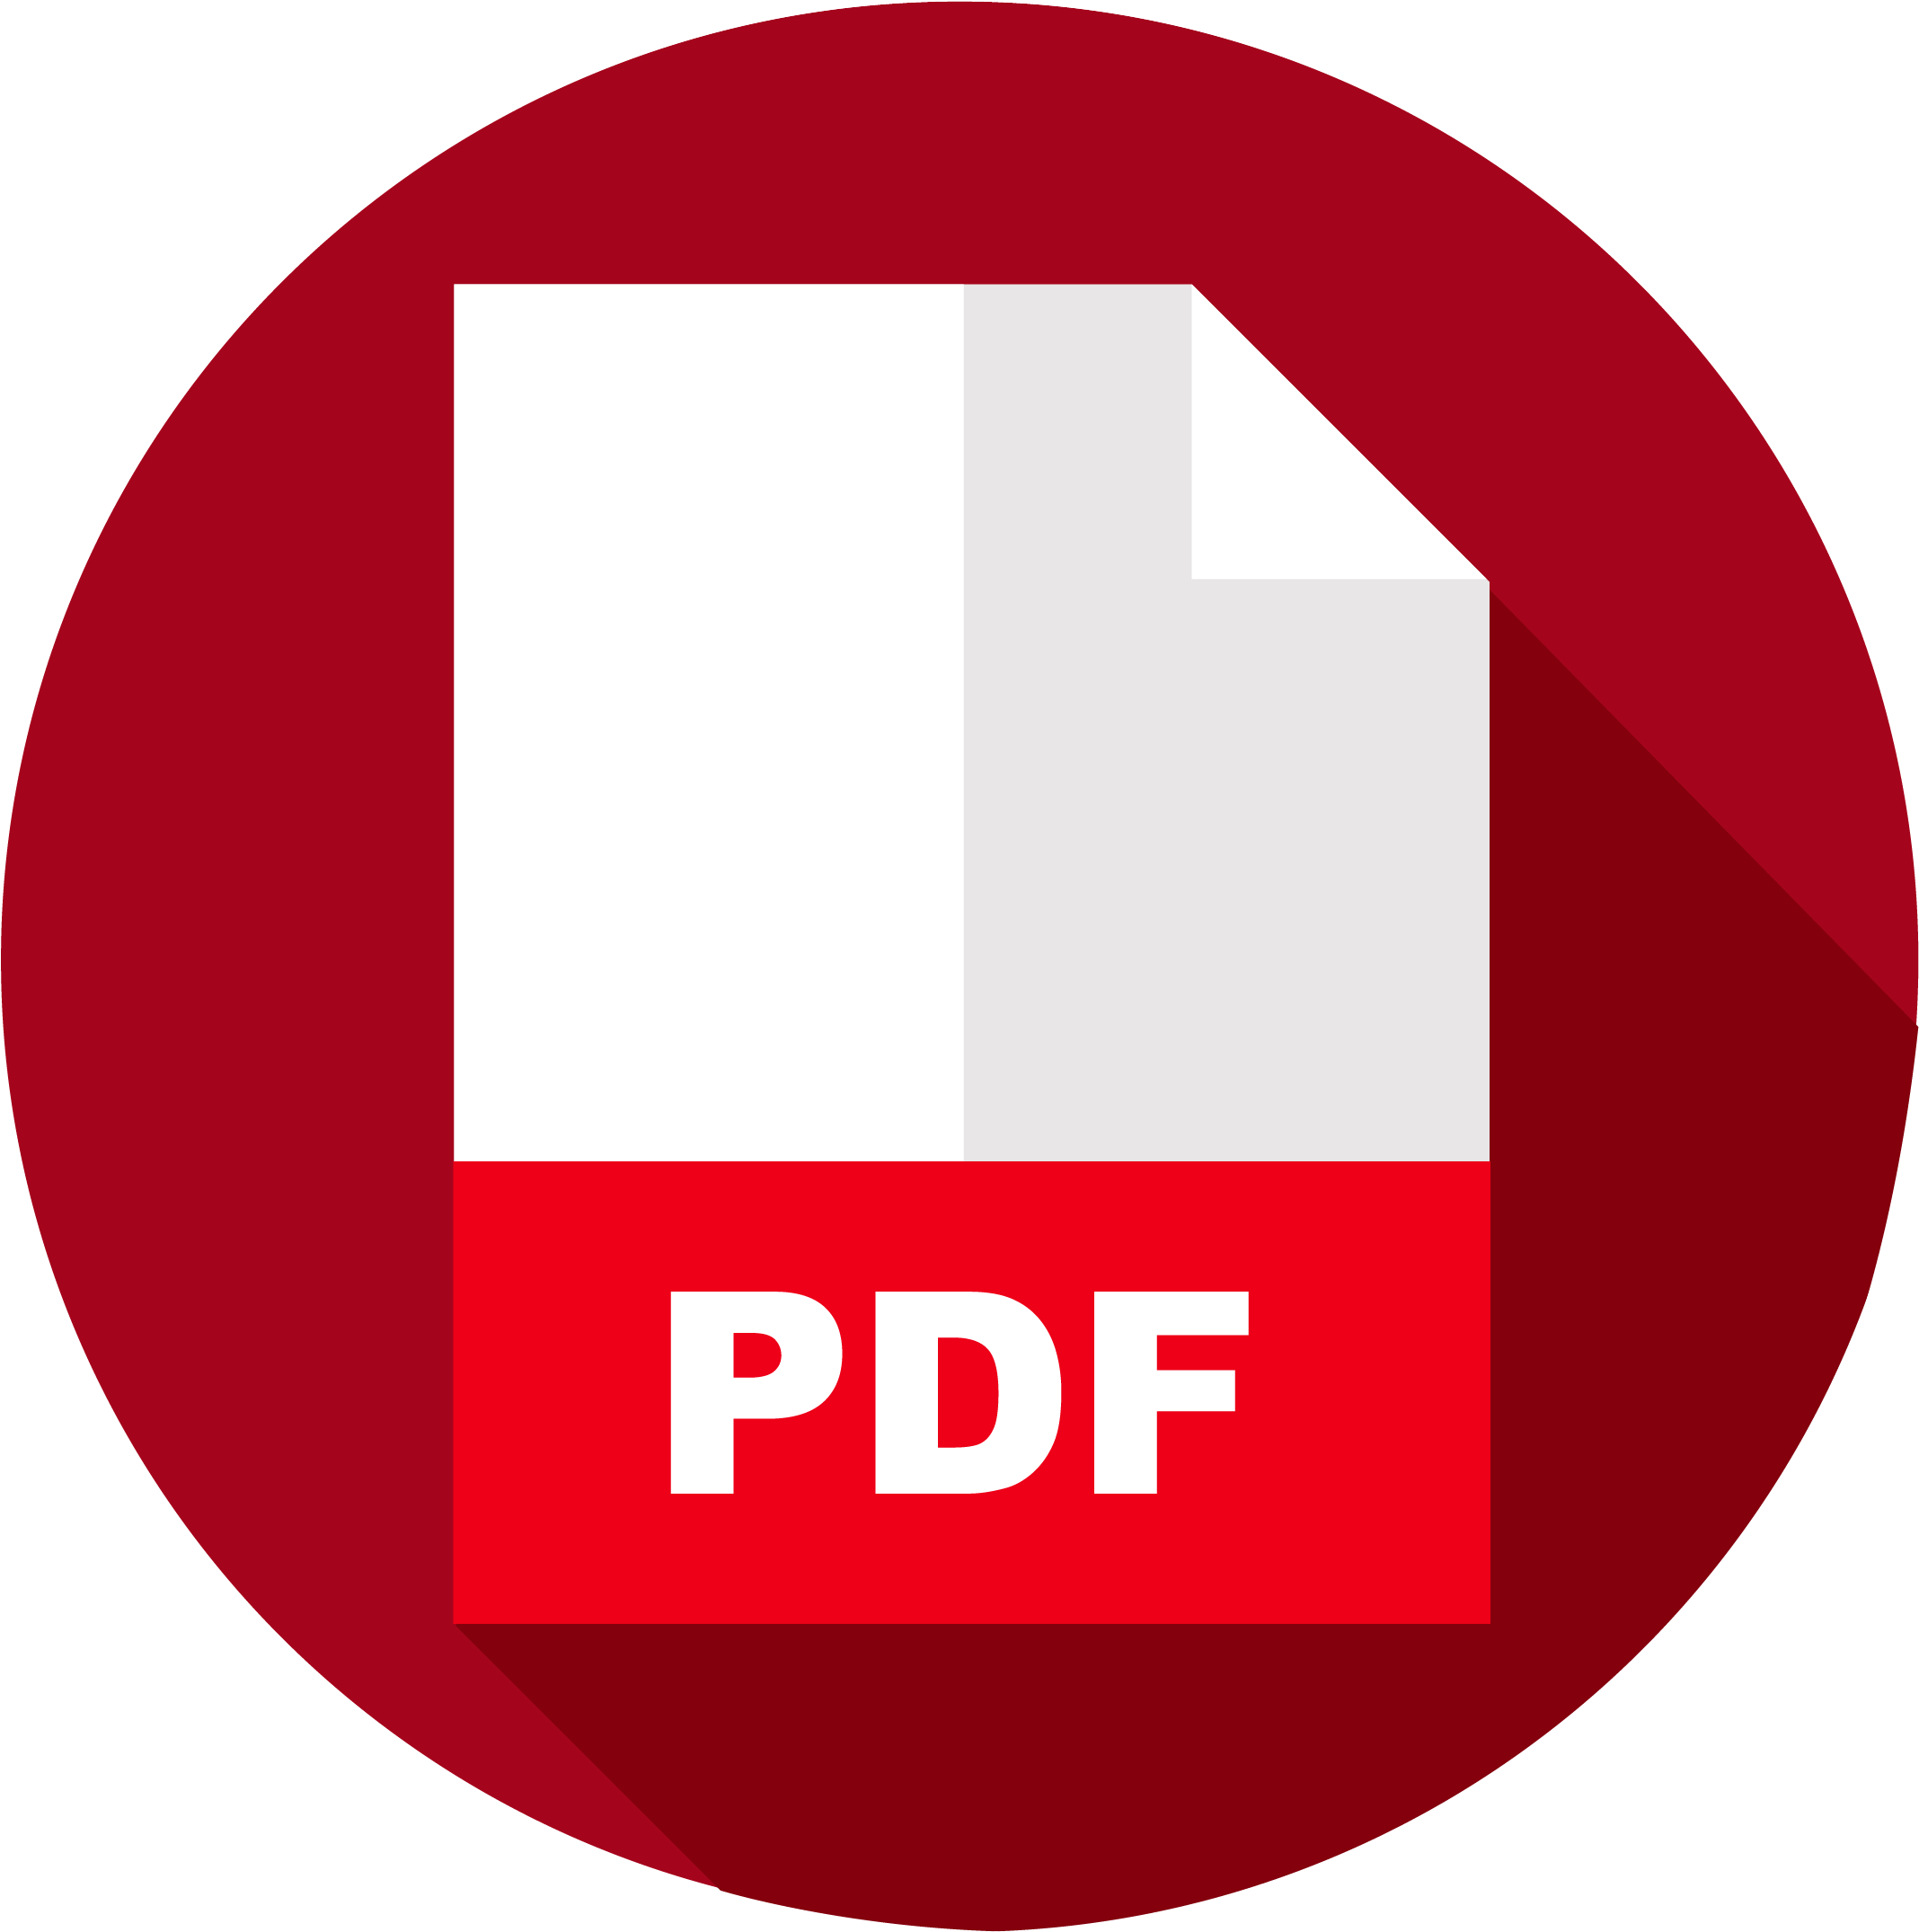 Pdf icon. Значок pdf. Ярлык pdf. Пиктограмма pdf. Значок pdf для сайта.